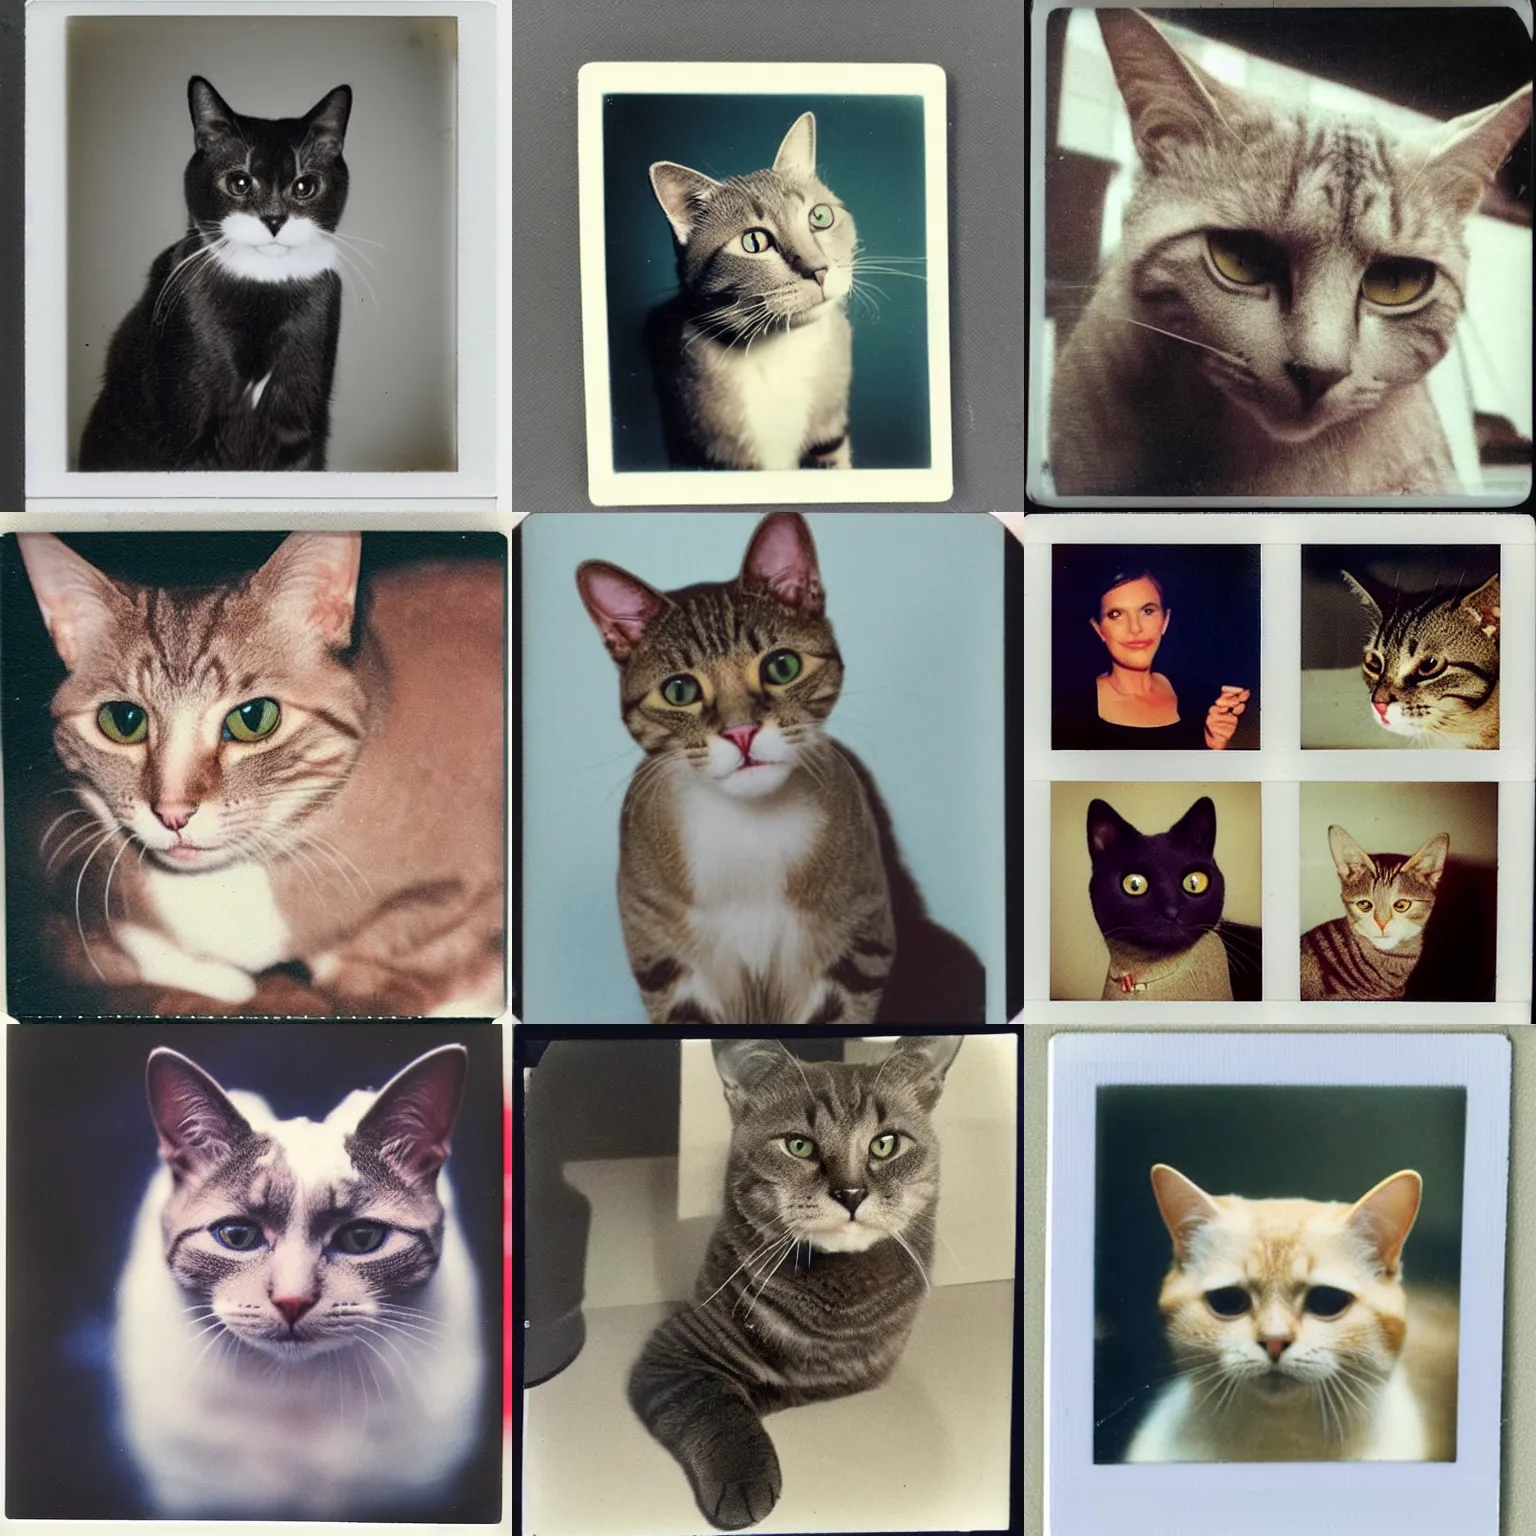 Prompt: polaroid photo of a cat who looks like Pauline Hanson